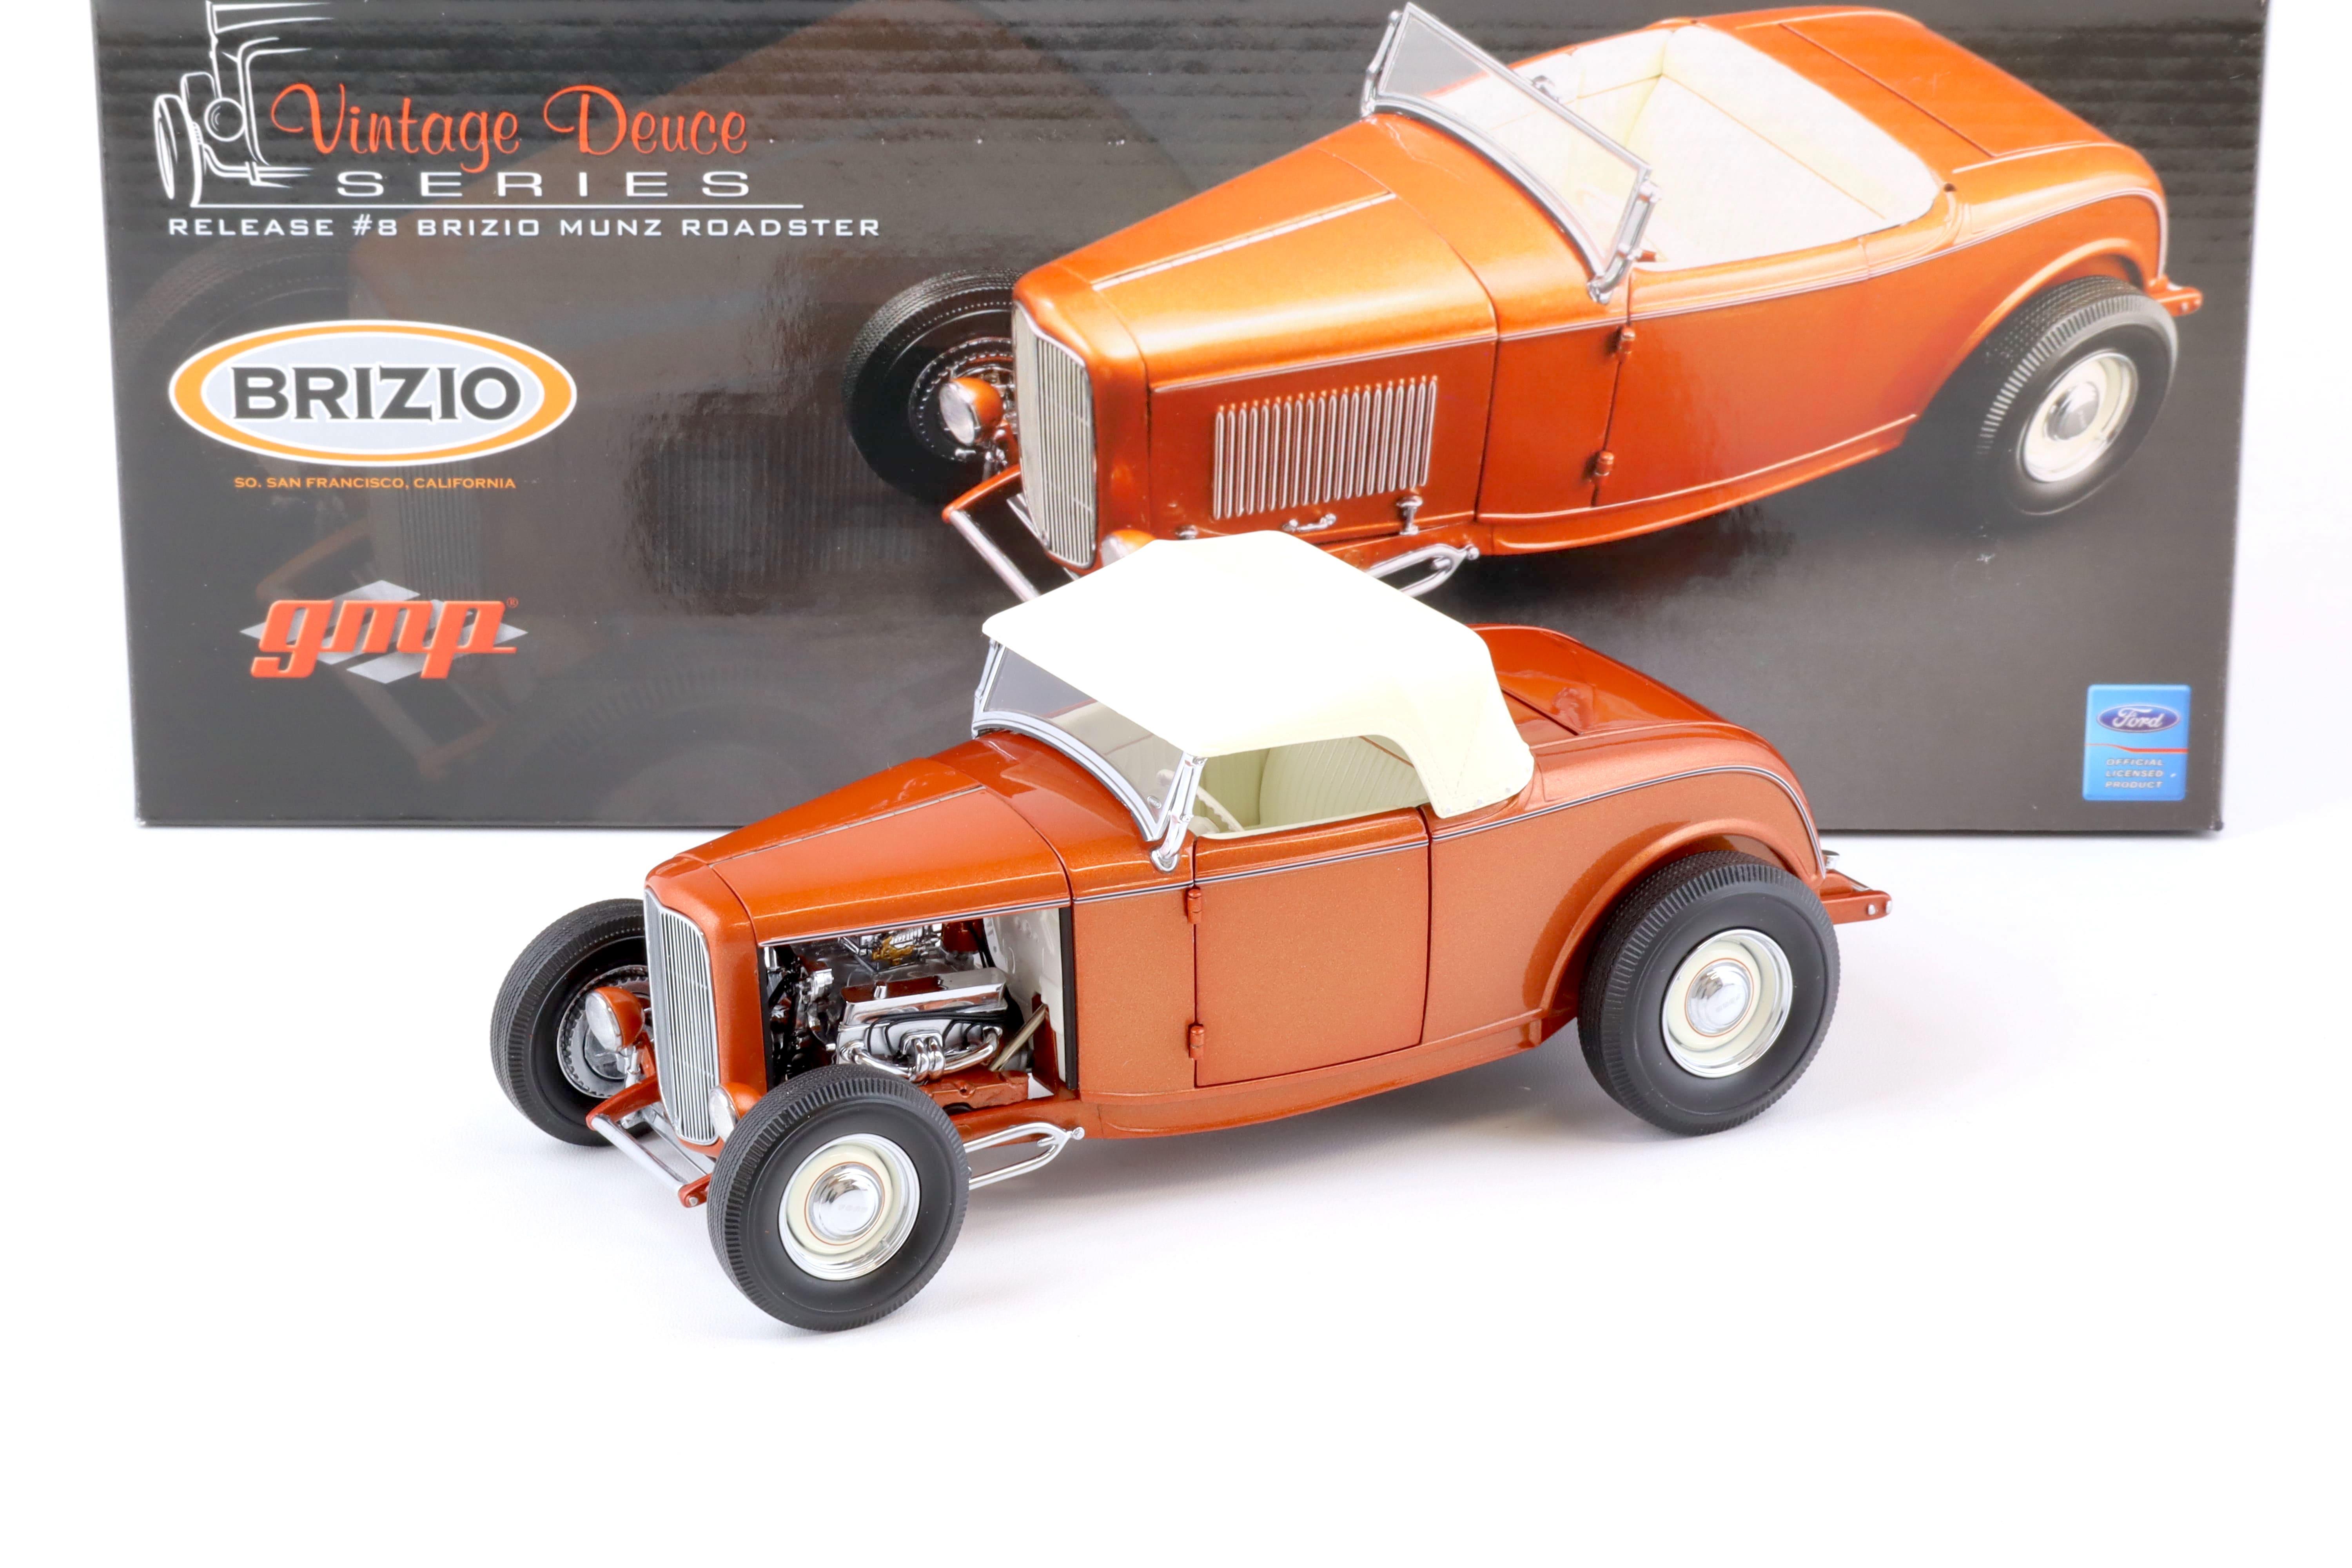 1:18 GMP Ford Deuce Vintage Deuce Series Hot Rod BRIZIO Munz Roadster orange